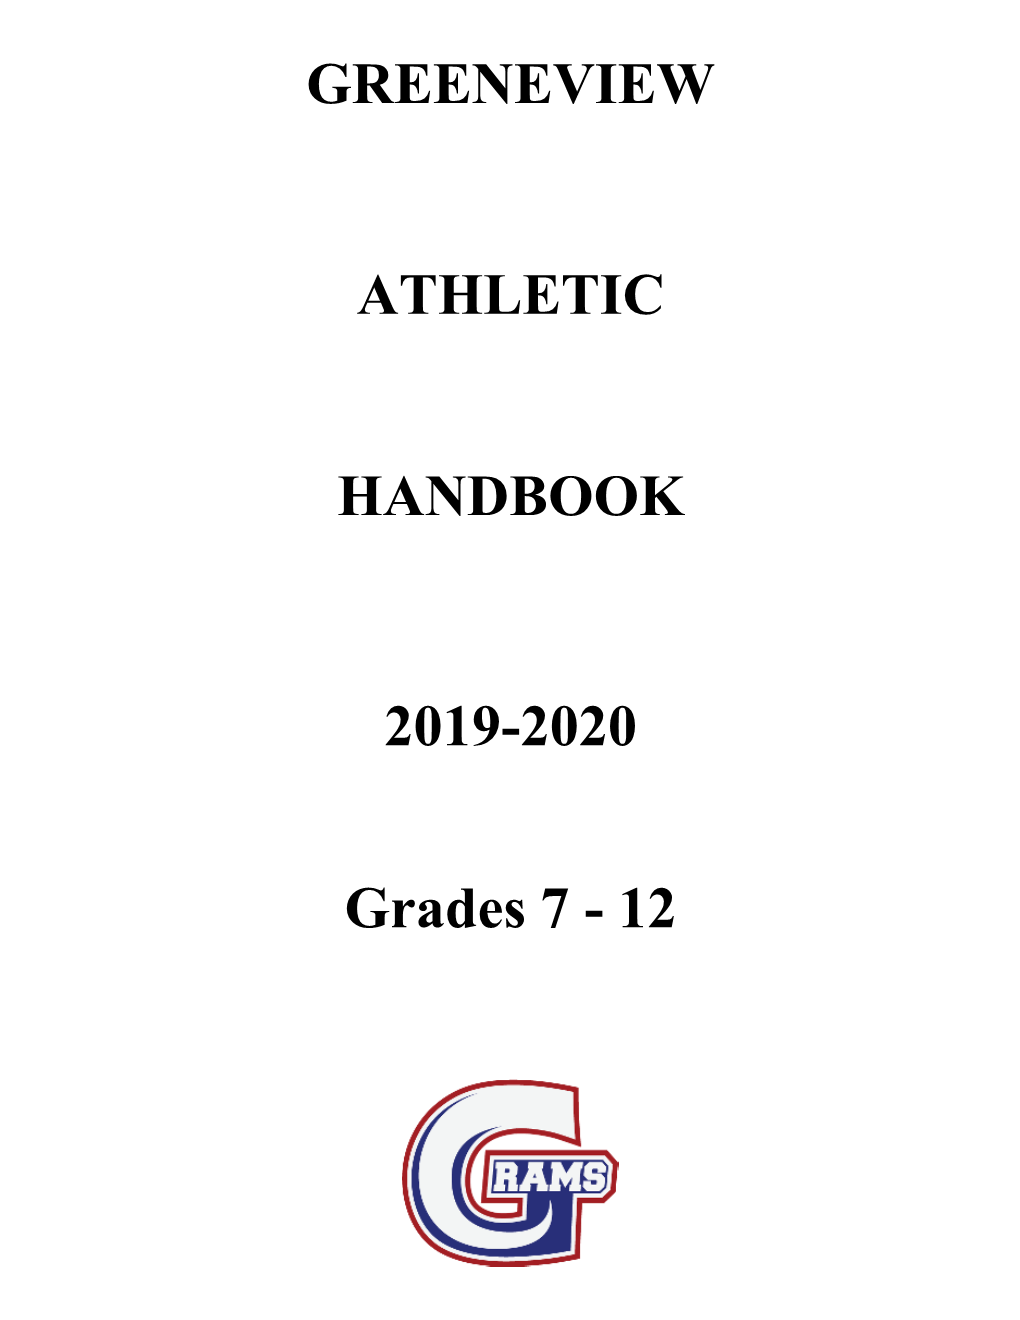 GREENEVIEW ATHLETIC HANDBOOK 2019-2020 Grades 7